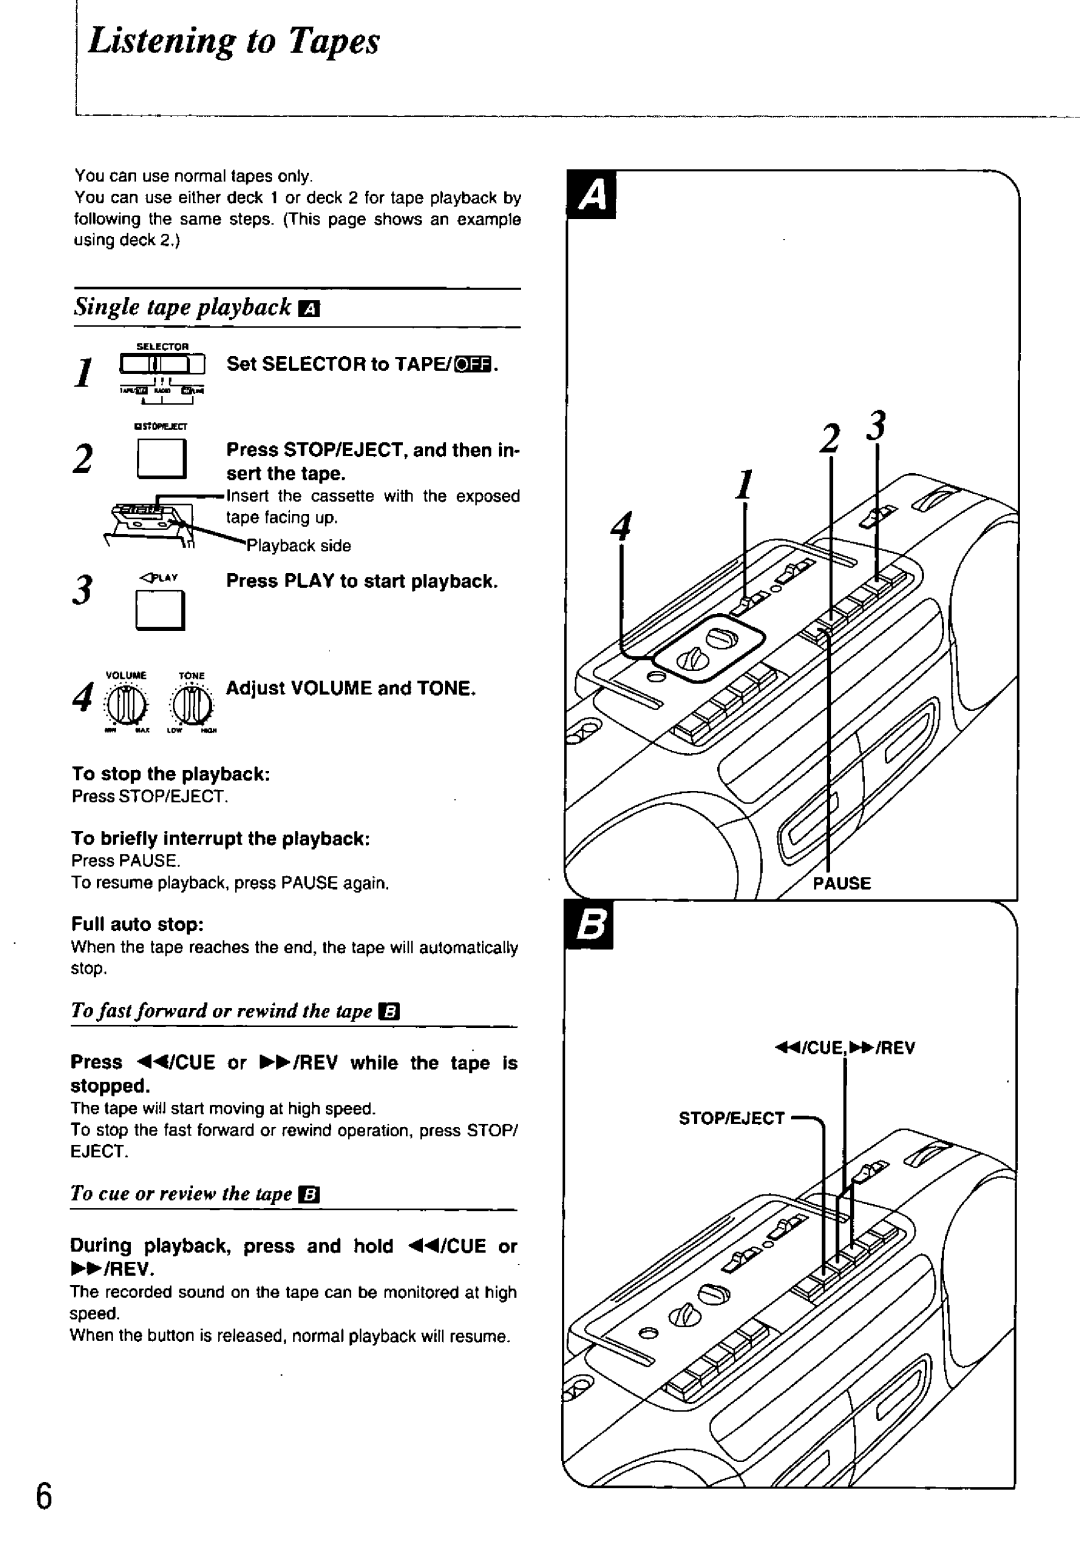 Panasonic RX-FT530, RQT2300-P manual 